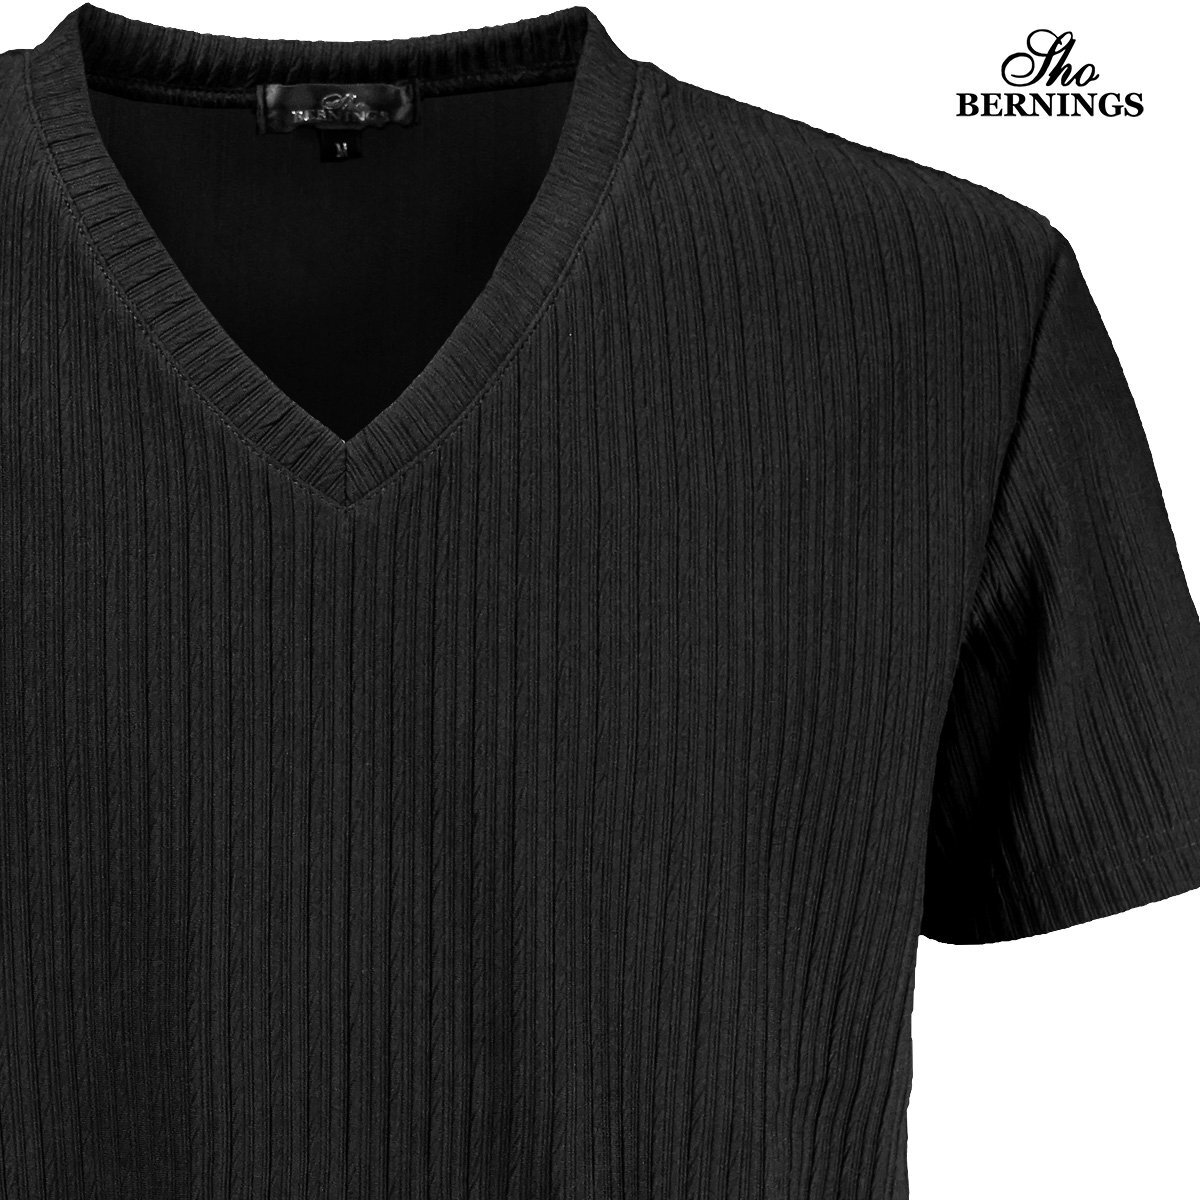 317932-90 Bernings sho Tシャツ Vネック ストライプ織柄 ジャガード メンズ シンプル 半袖 (ブラック黒) L カットソー トップス タイト_画像3